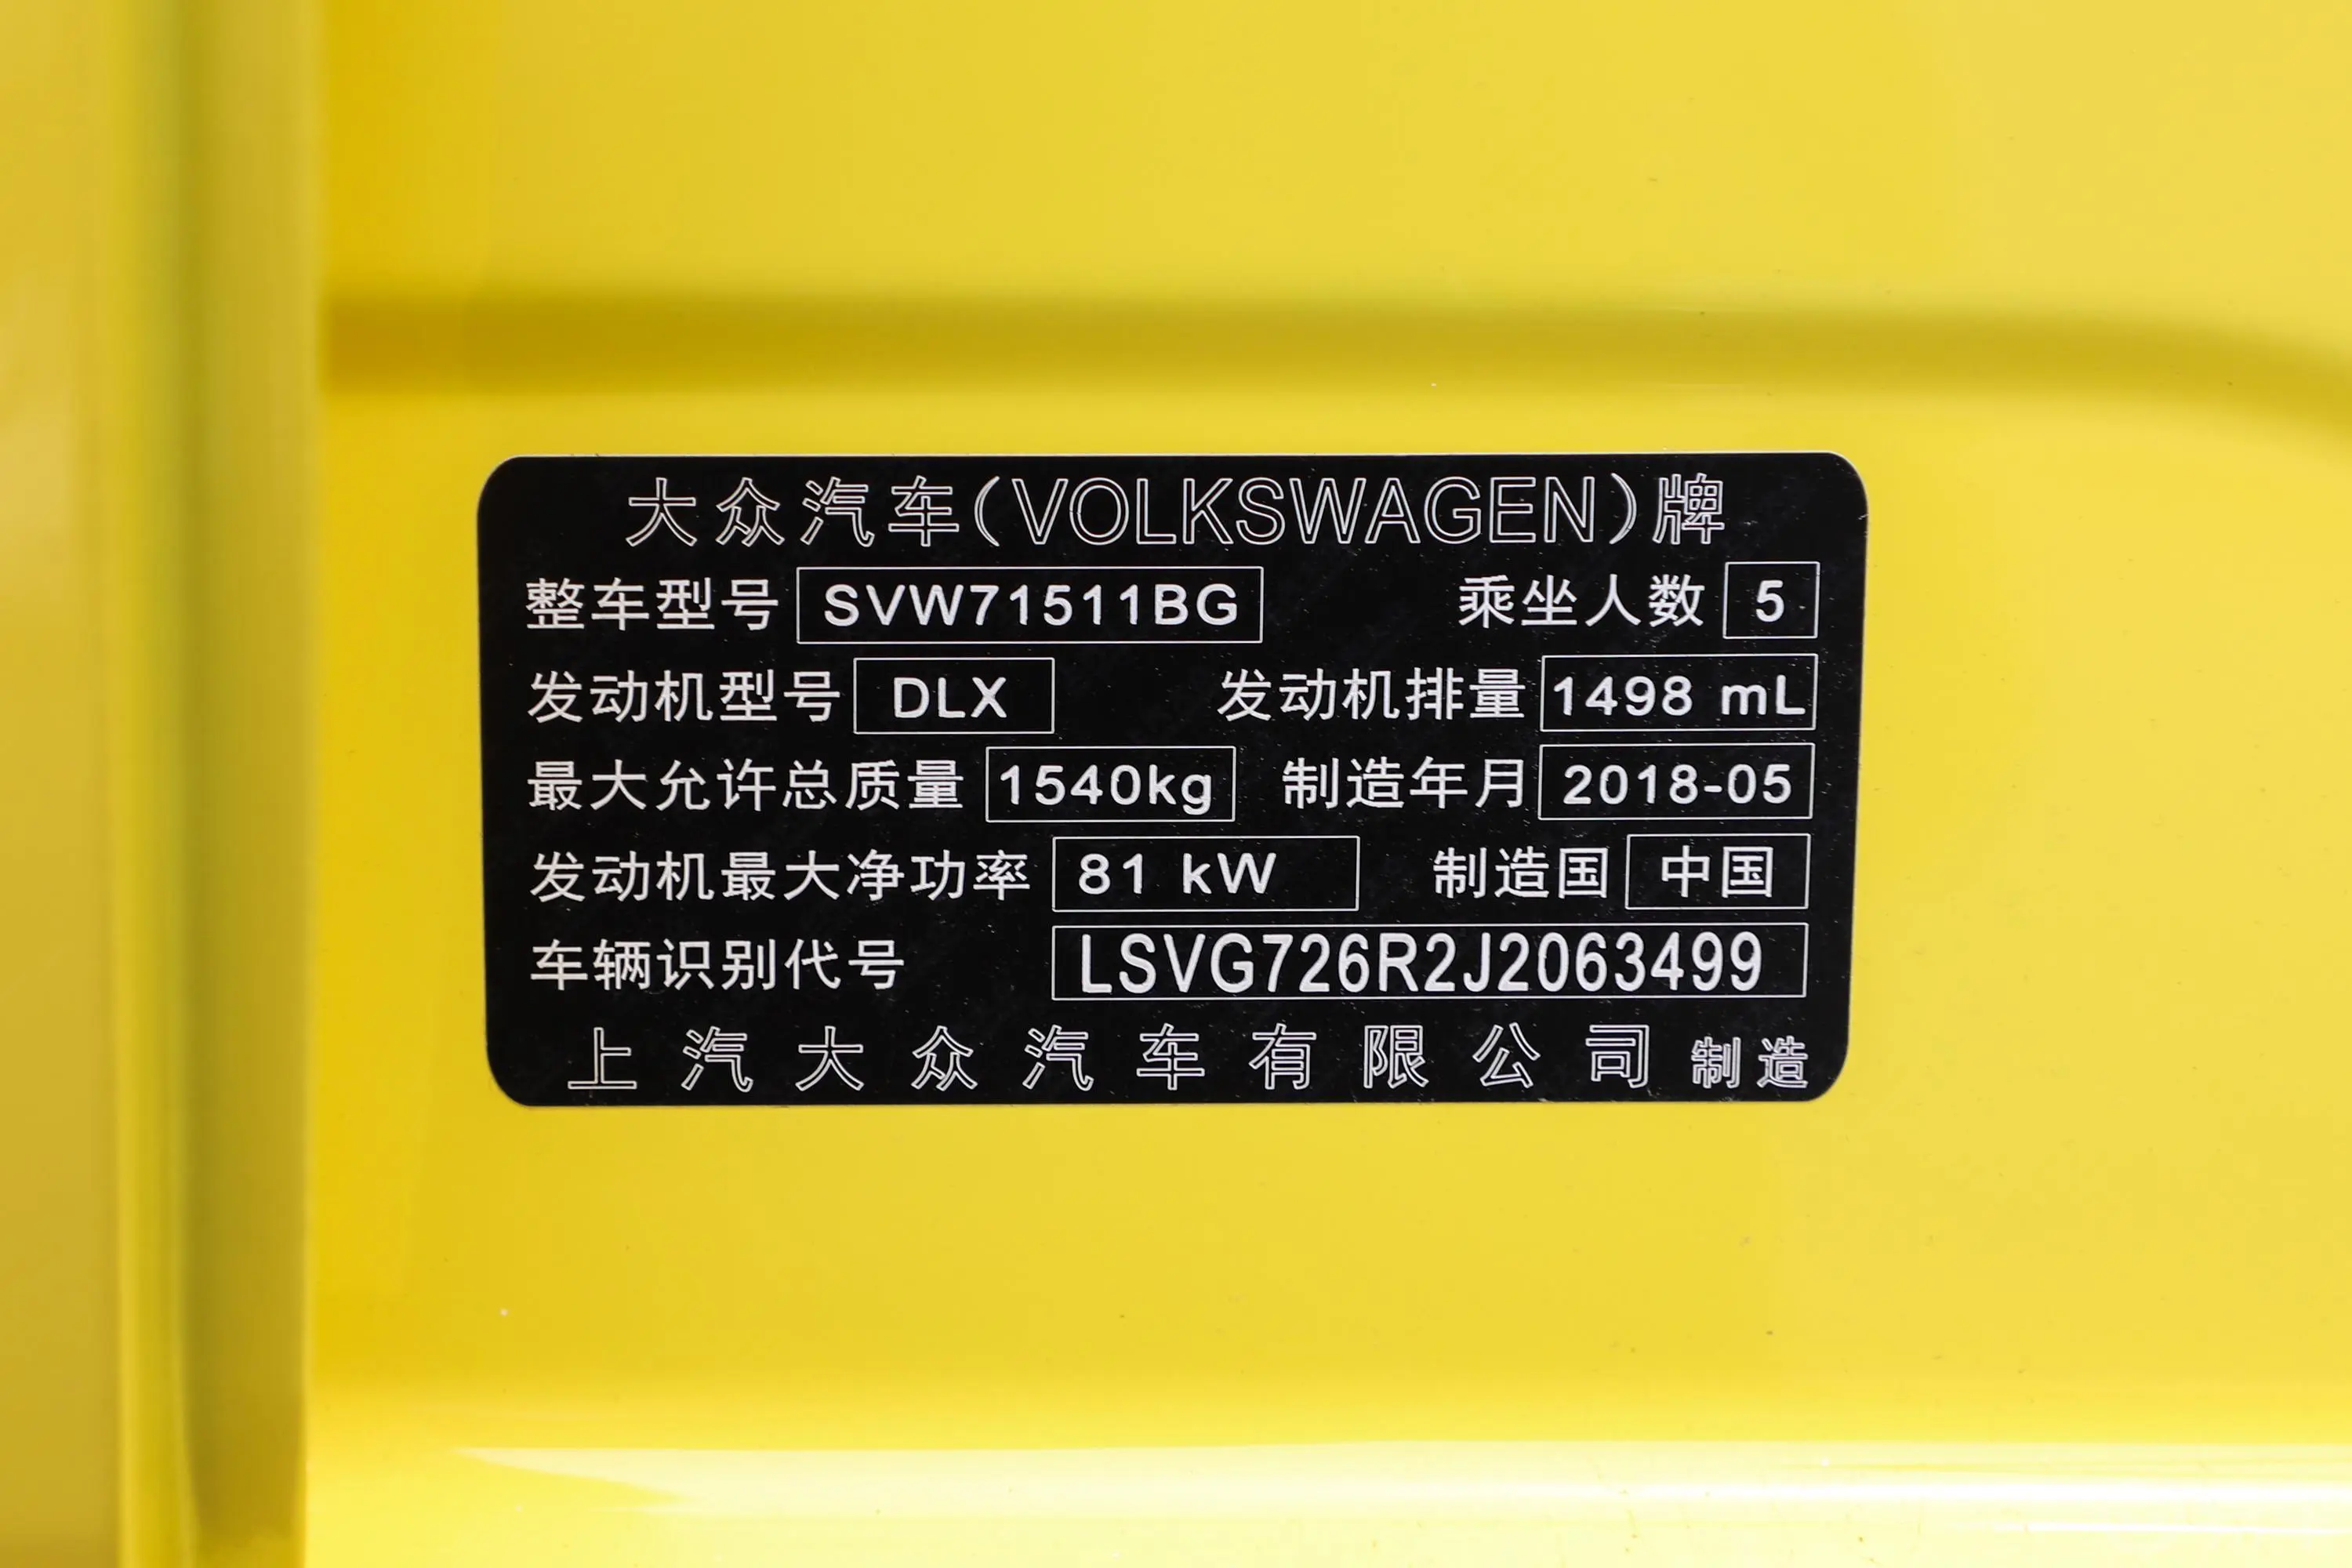 Polo1.5L 自动 安享版车辆信息铭牌